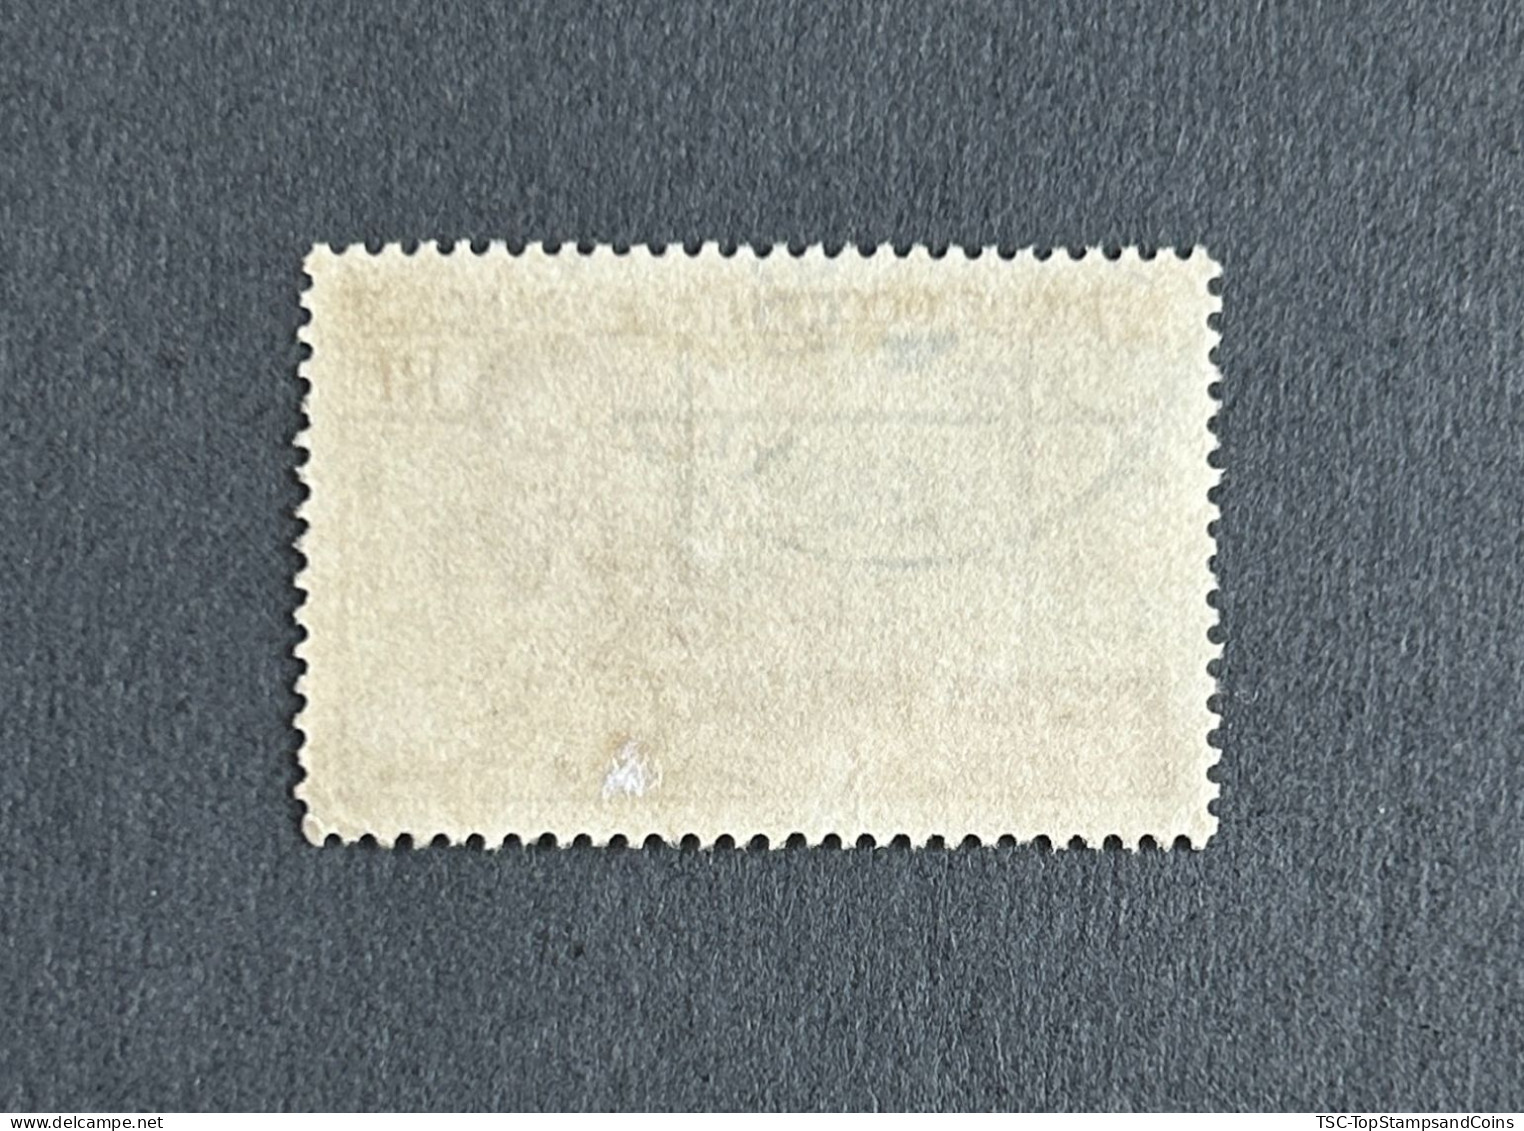 FRAWA0048U1 - Local People - Medical Laboratory - 15 F Used Stamp - AOF - 1953 - Gebraucht